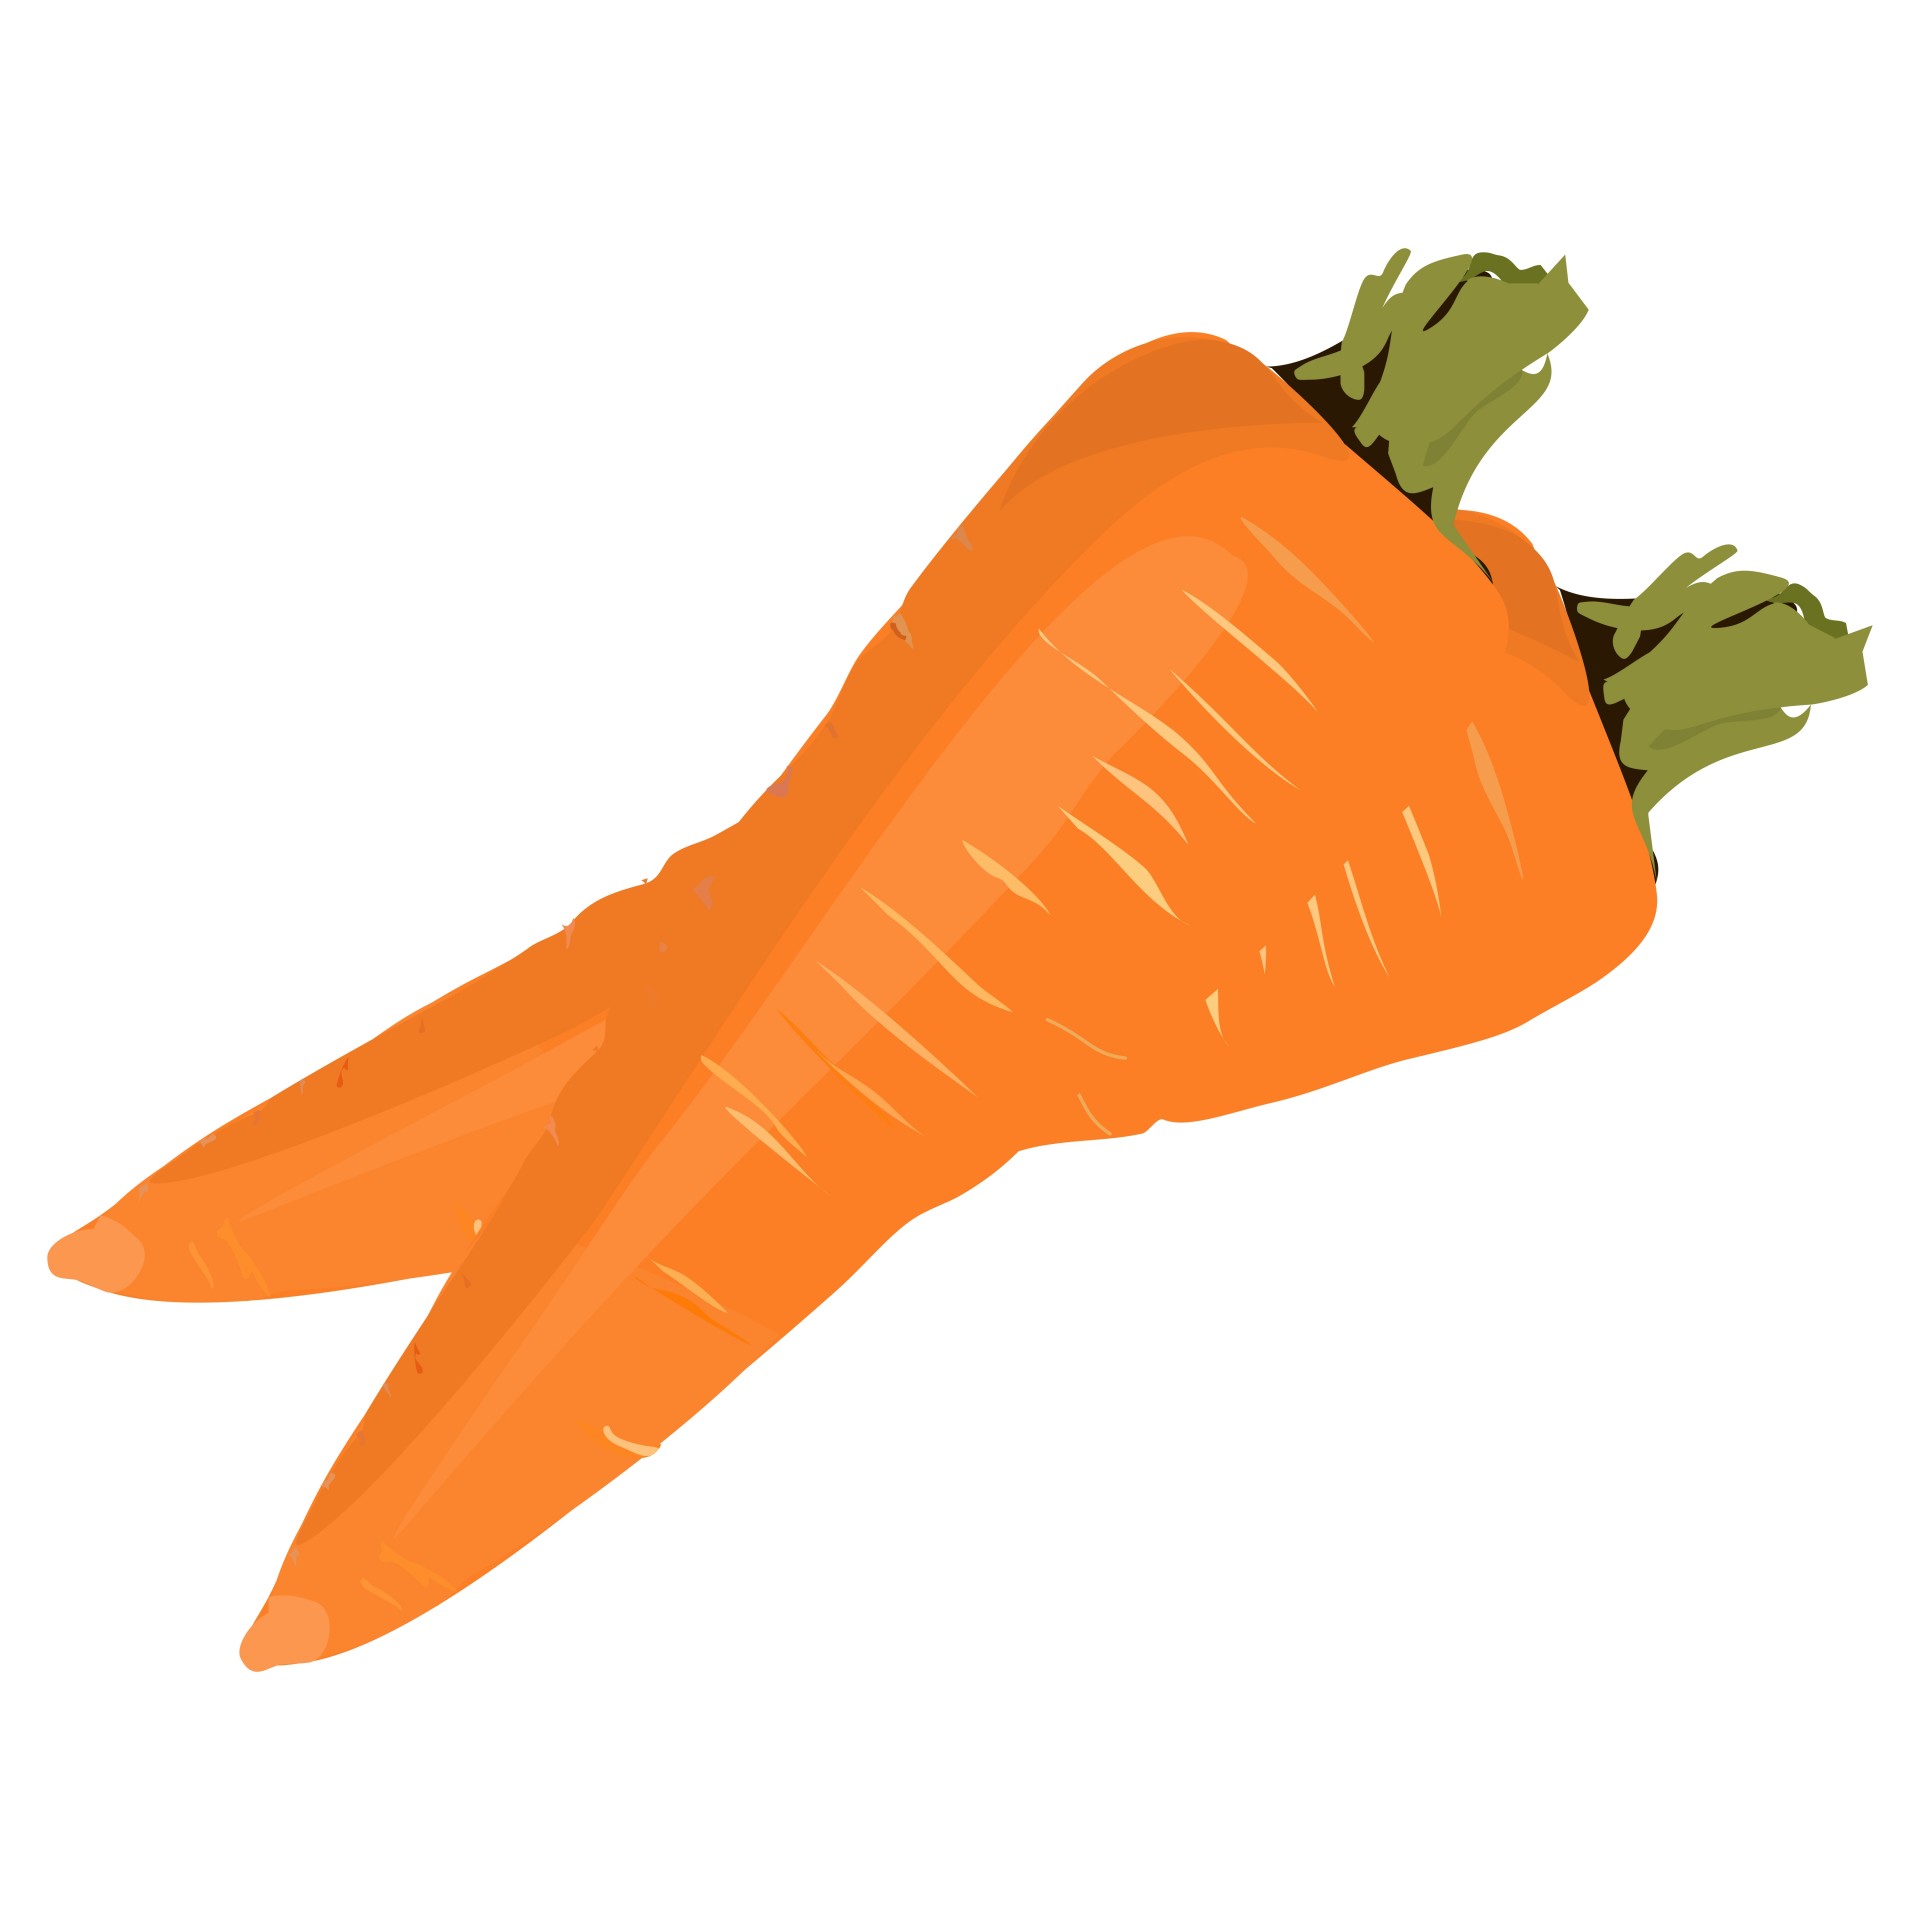 clipart carrots free - photo #37